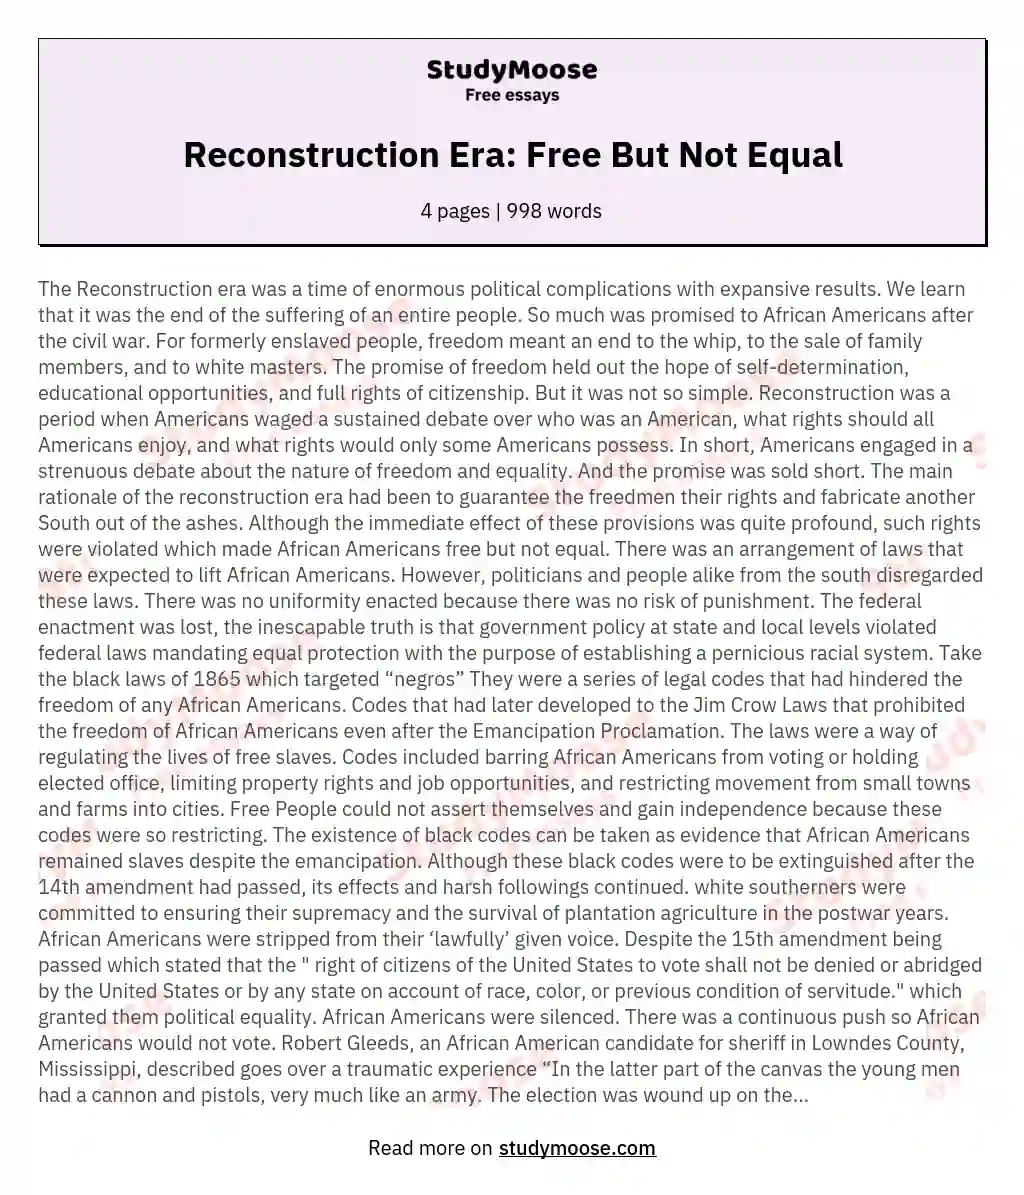 Reconstruction Era: Free But Not Equal essay